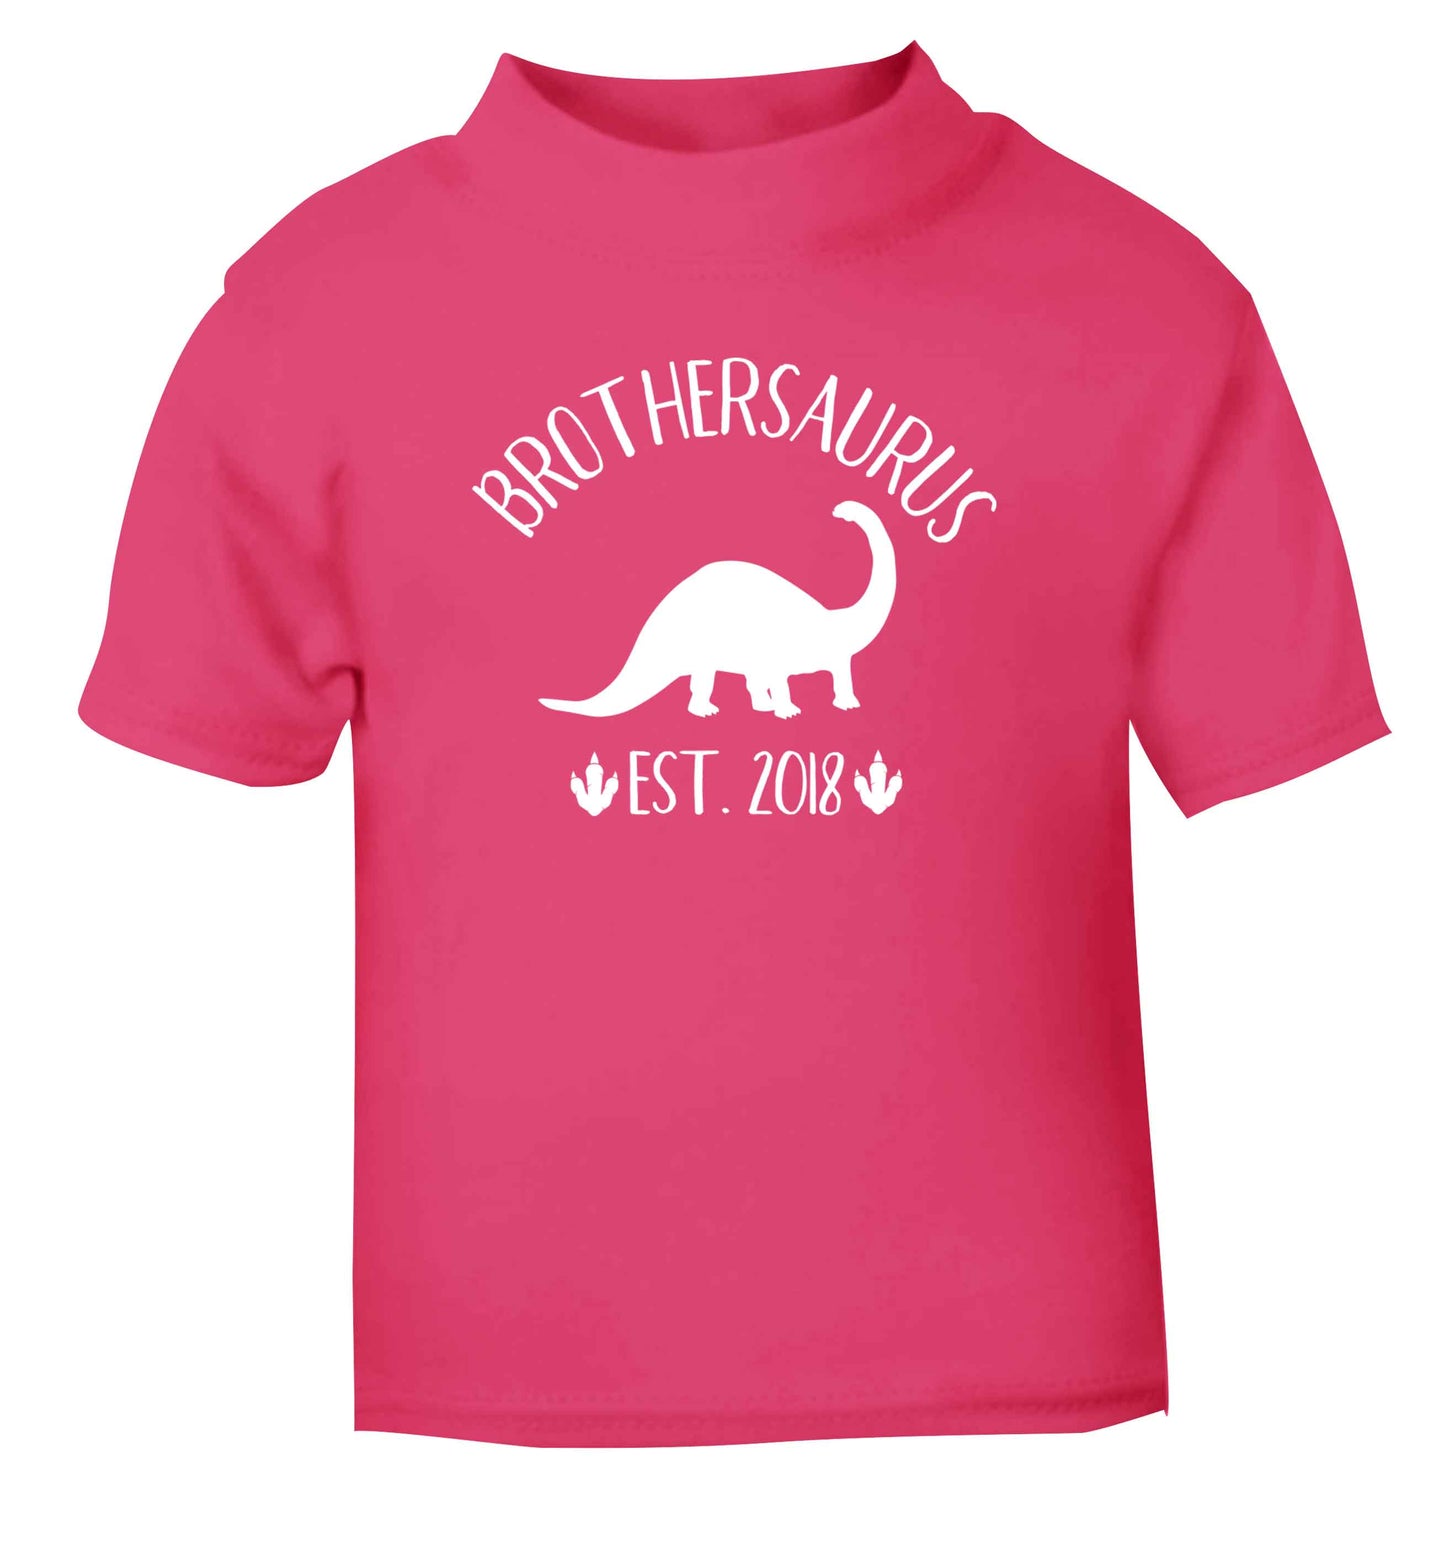 Personalised brothersaurus since (custom date) pink Baby Toddler Tshirt 2 Years